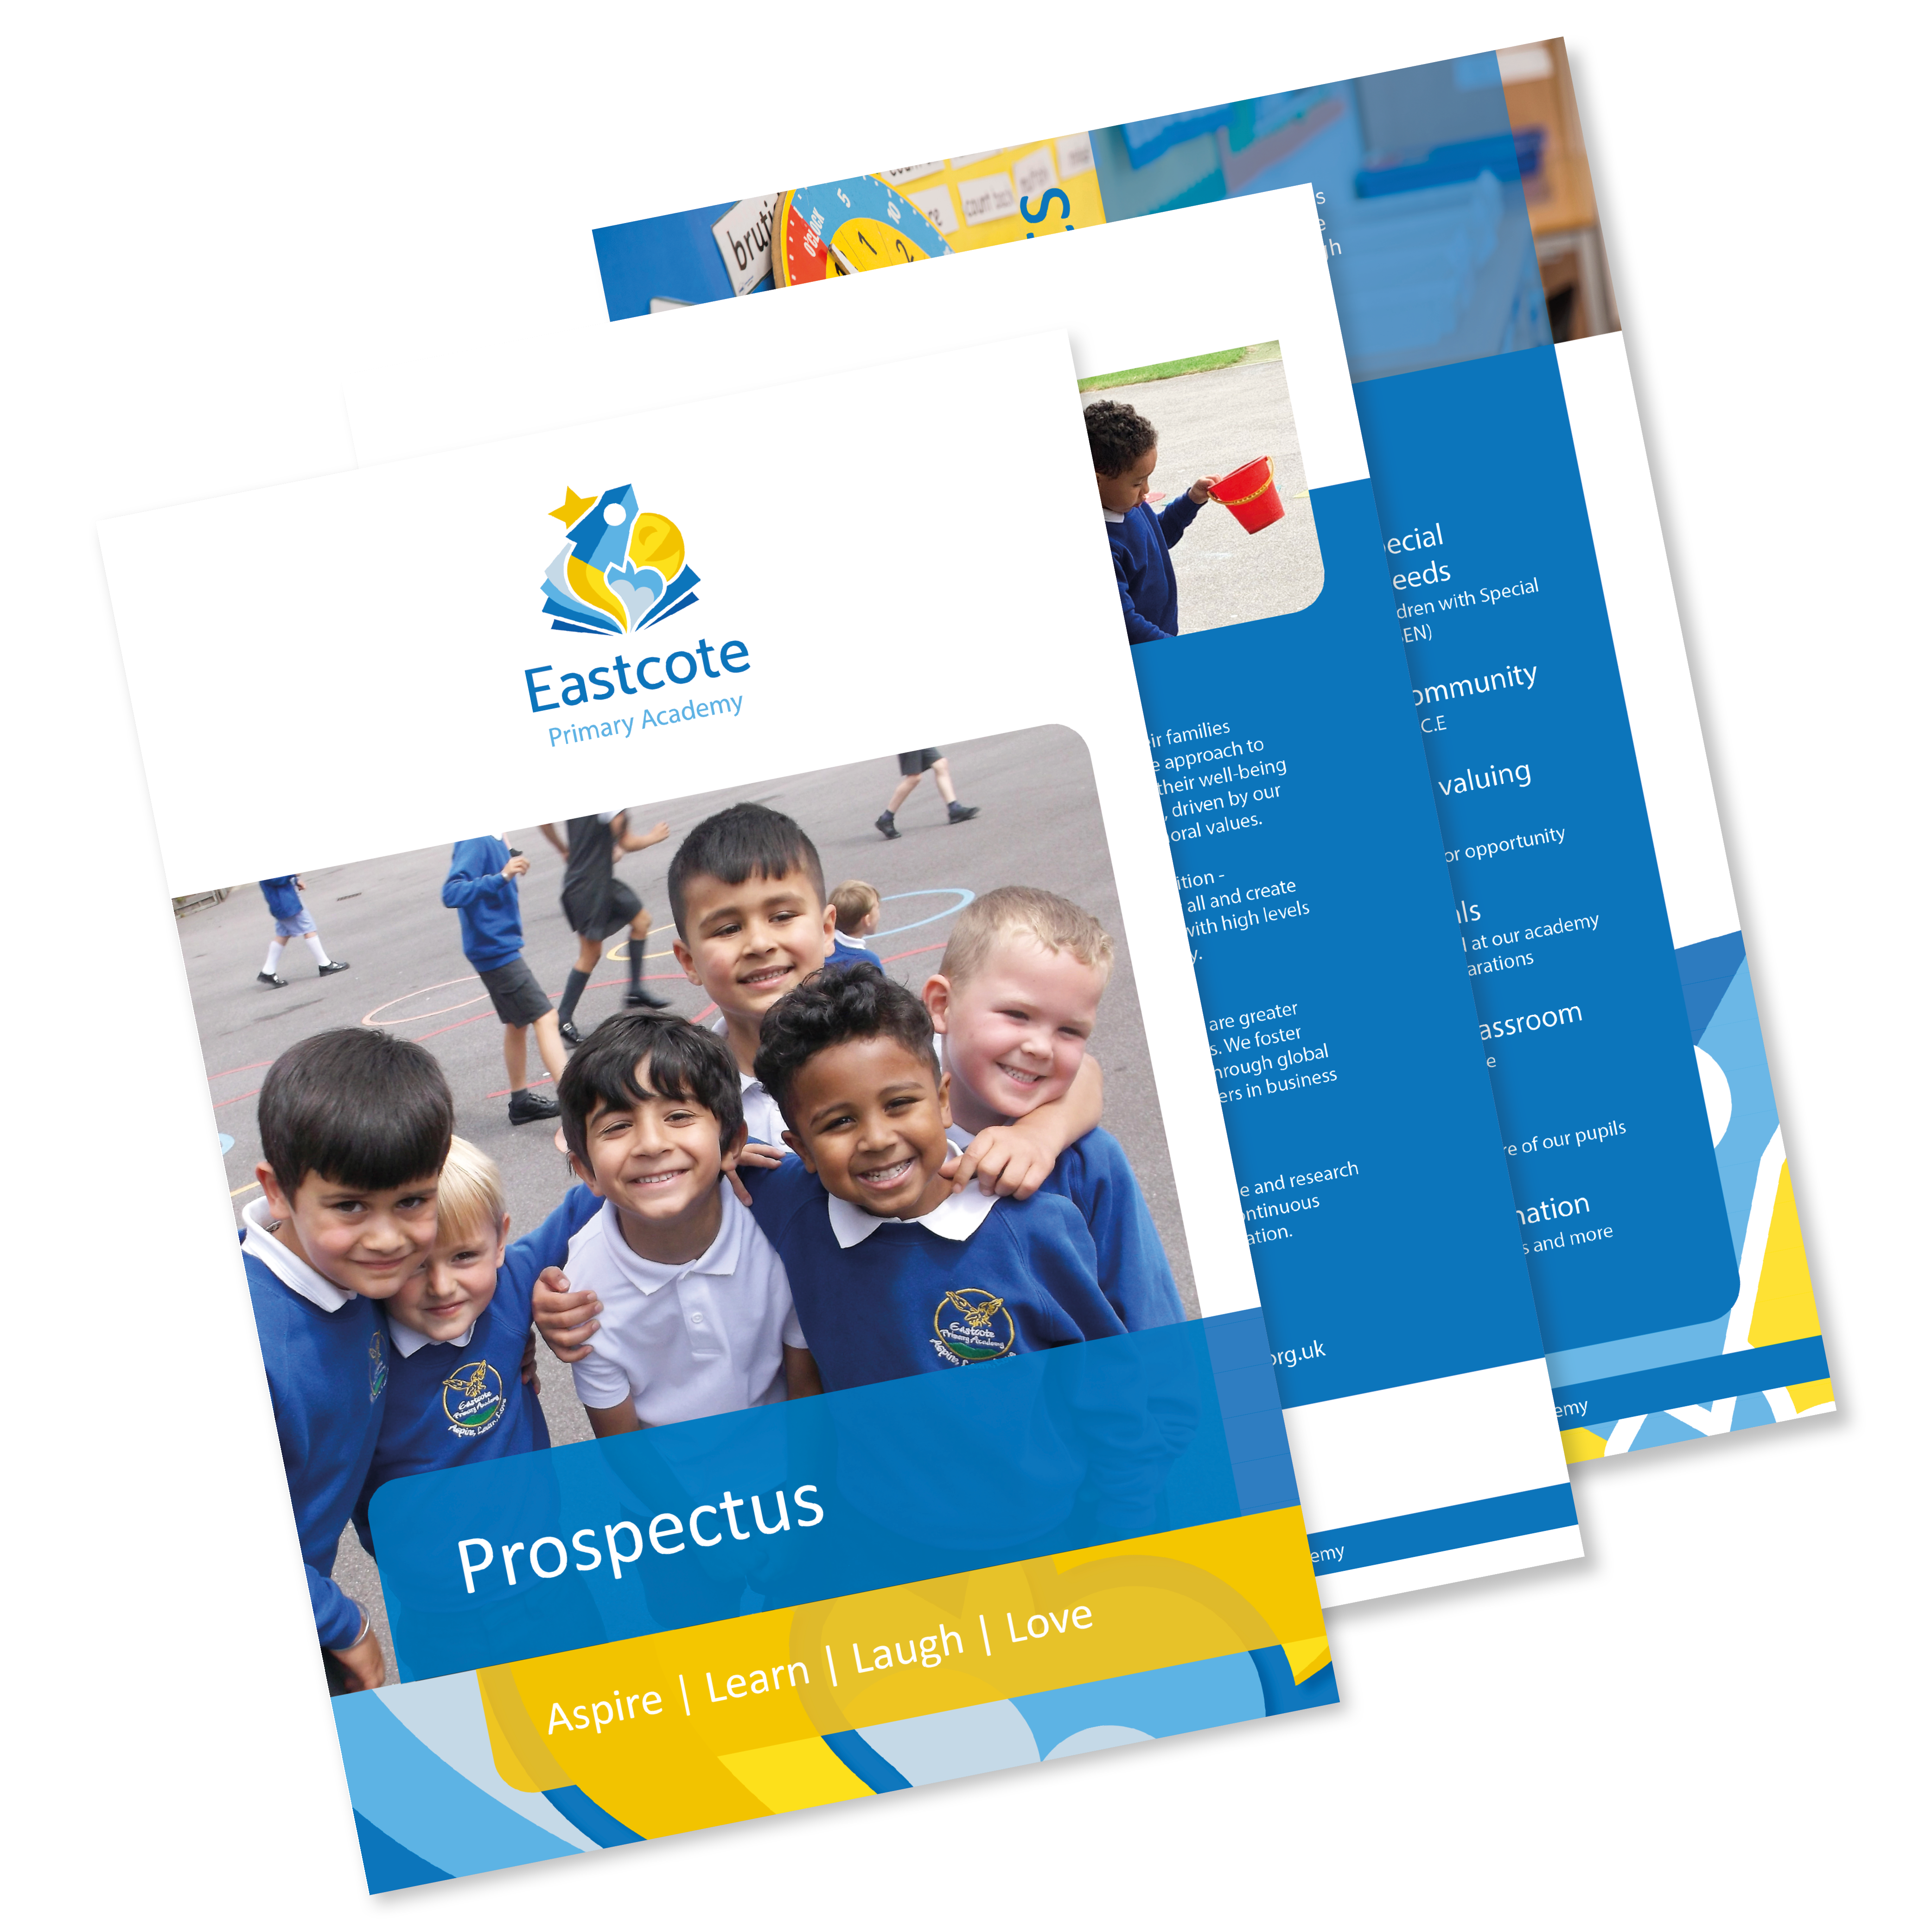 Eastcote Primary Academy Prospectus Web Tile image.